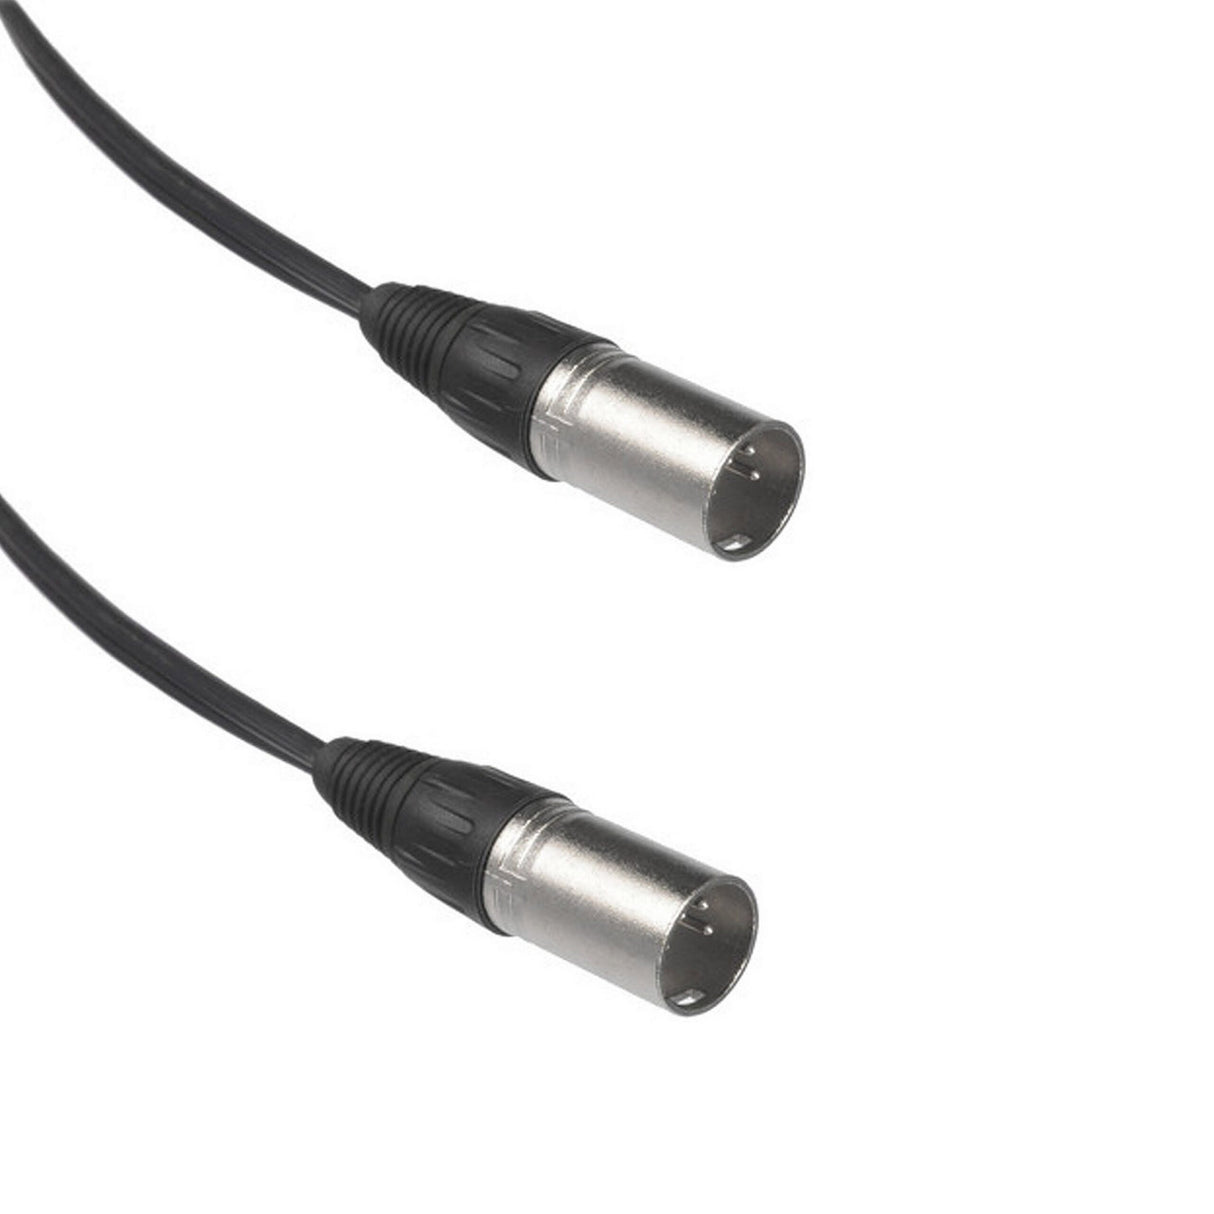 Bescor XLR-5MM 4-Pin XLR Male to 4-Pin XLR Male Cable, 5 Foot